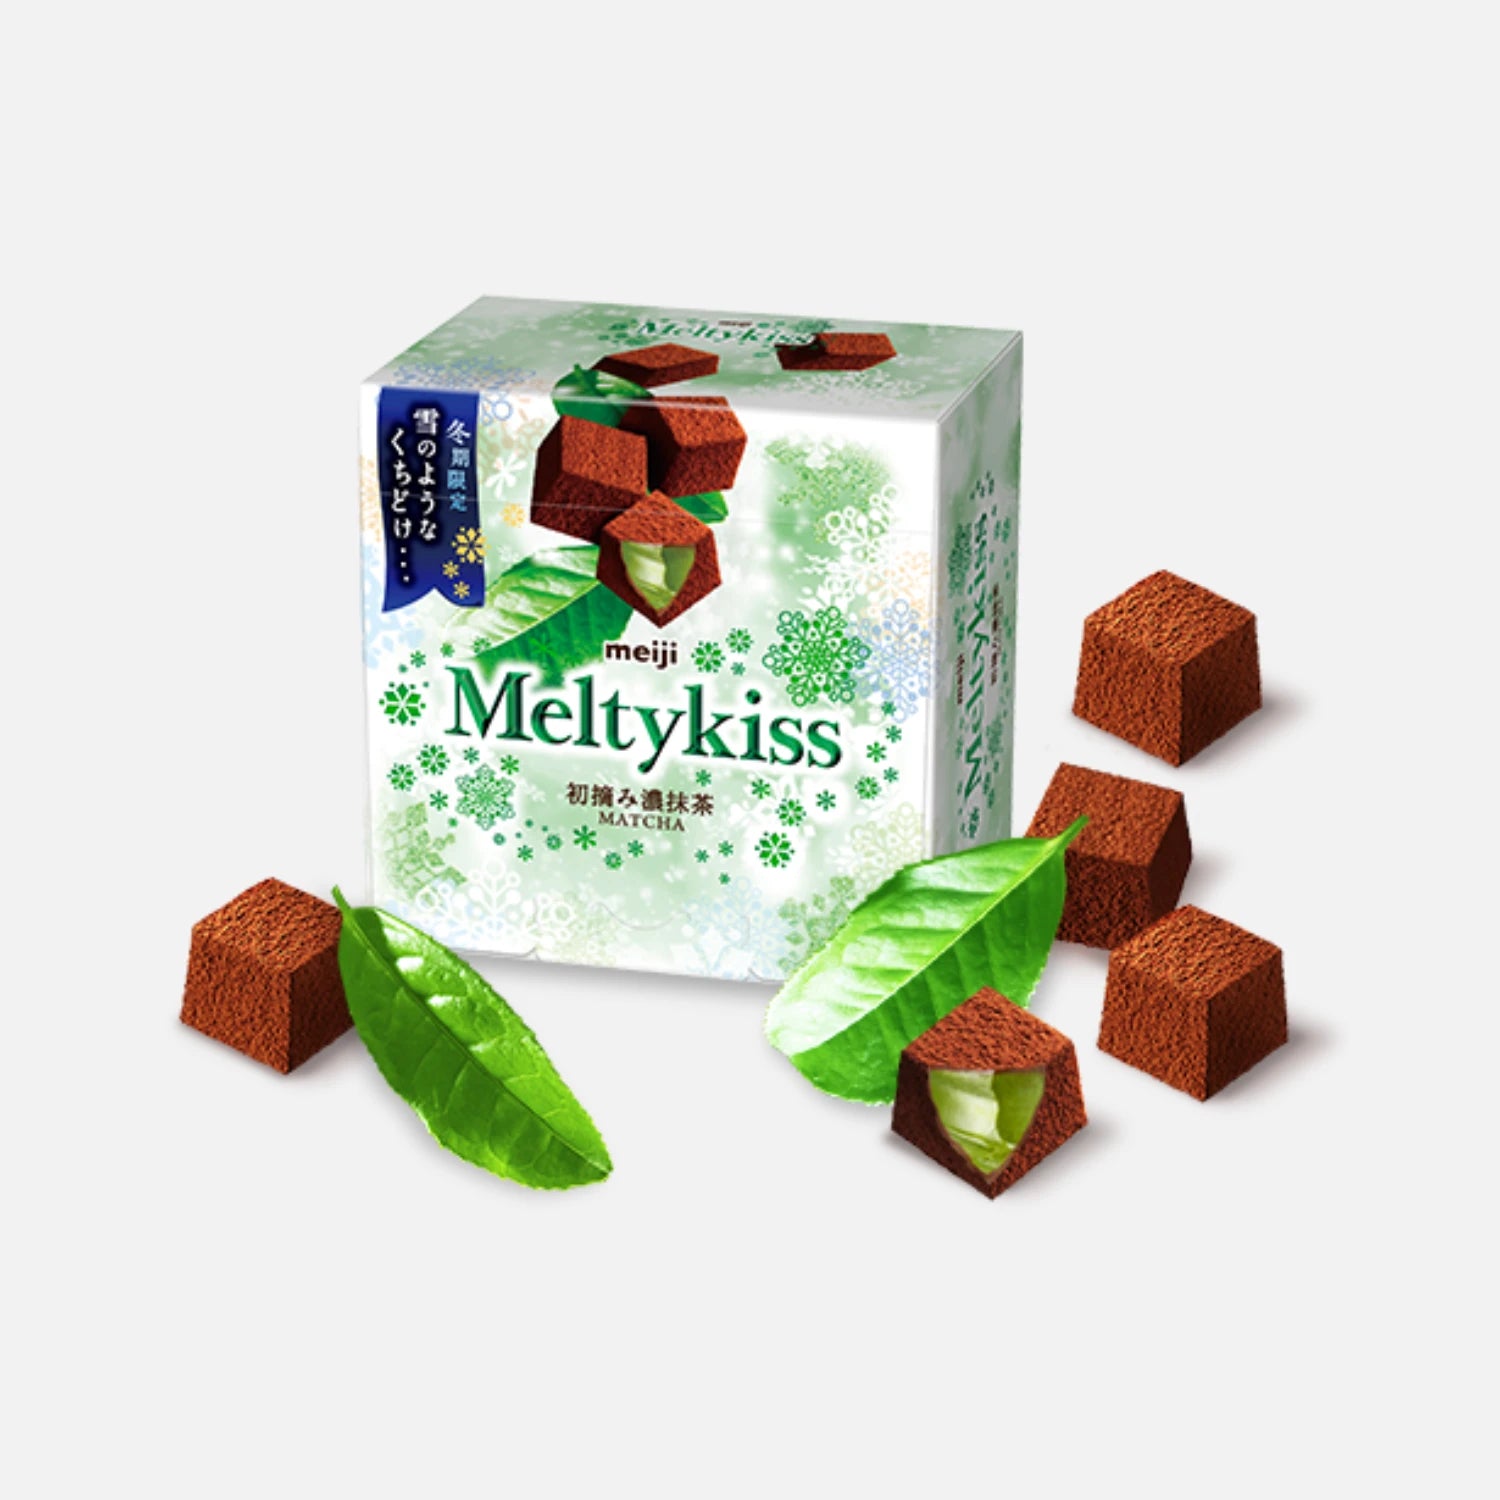 Meiji Melty Kiss Matcha 52g - Buy Me Japan